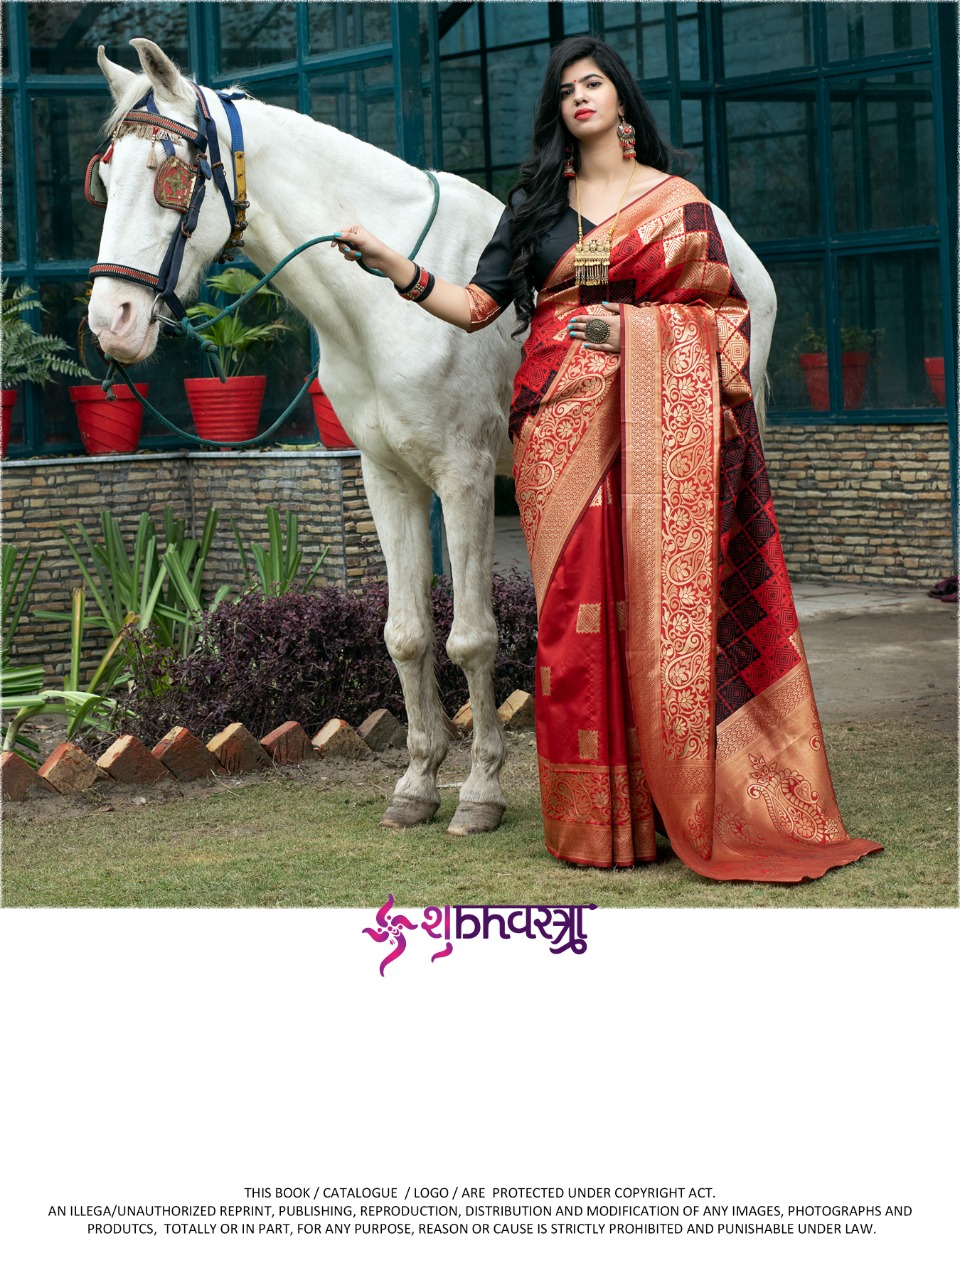 Shubh Vastra Presents Rajwadi Vol-2 Banarasi Silk Exclusive Designer Sarees Cataloge Wholesaler